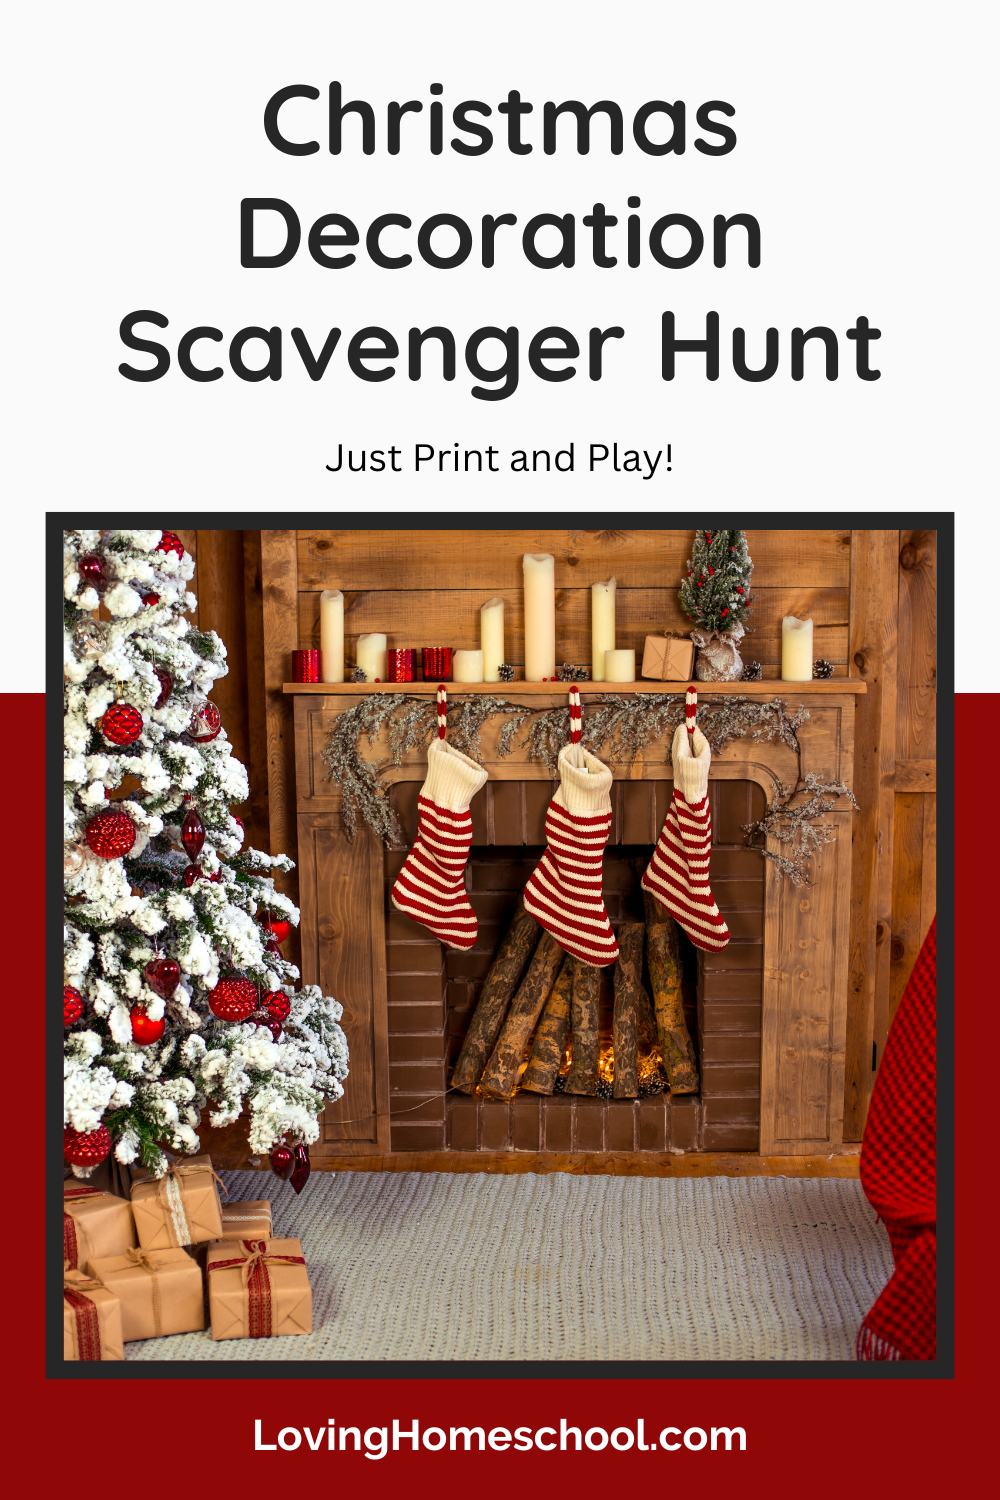 Christmas Decoration Scavenger Hunt Pinterest Pin